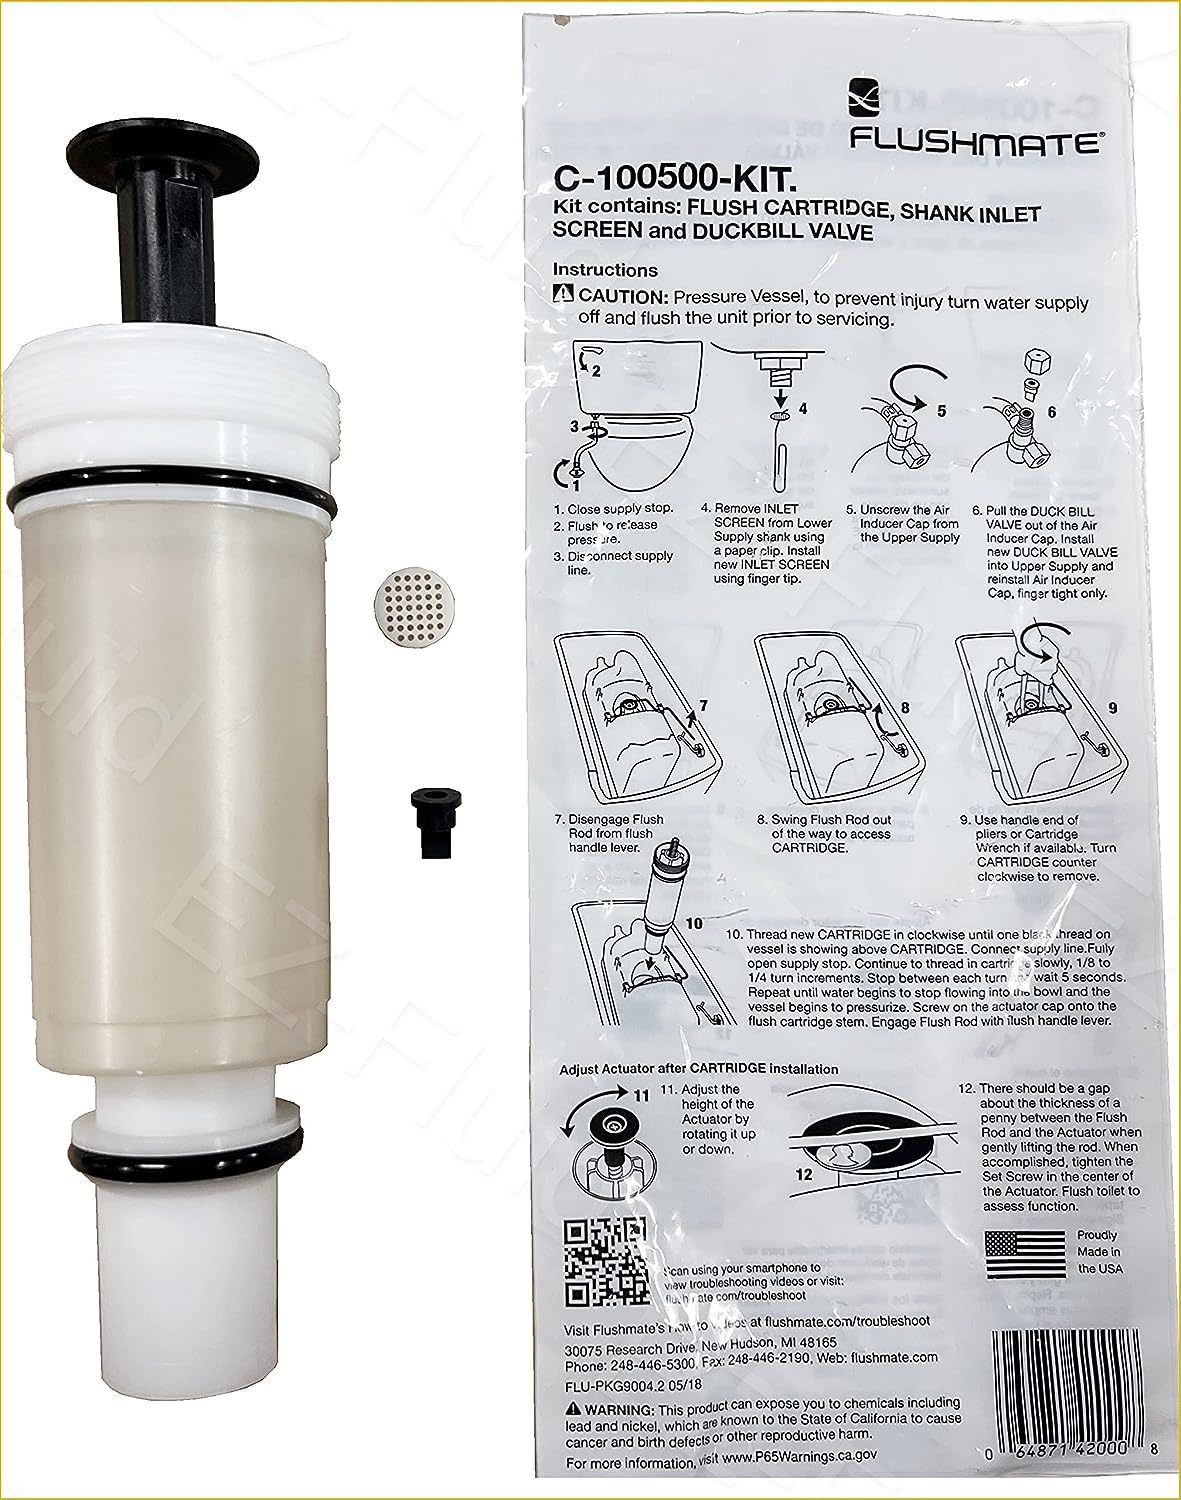 Primary image for Replacement For Sloan C-100500-K Flushmate Cartridge/Powerflush Toilet Piston